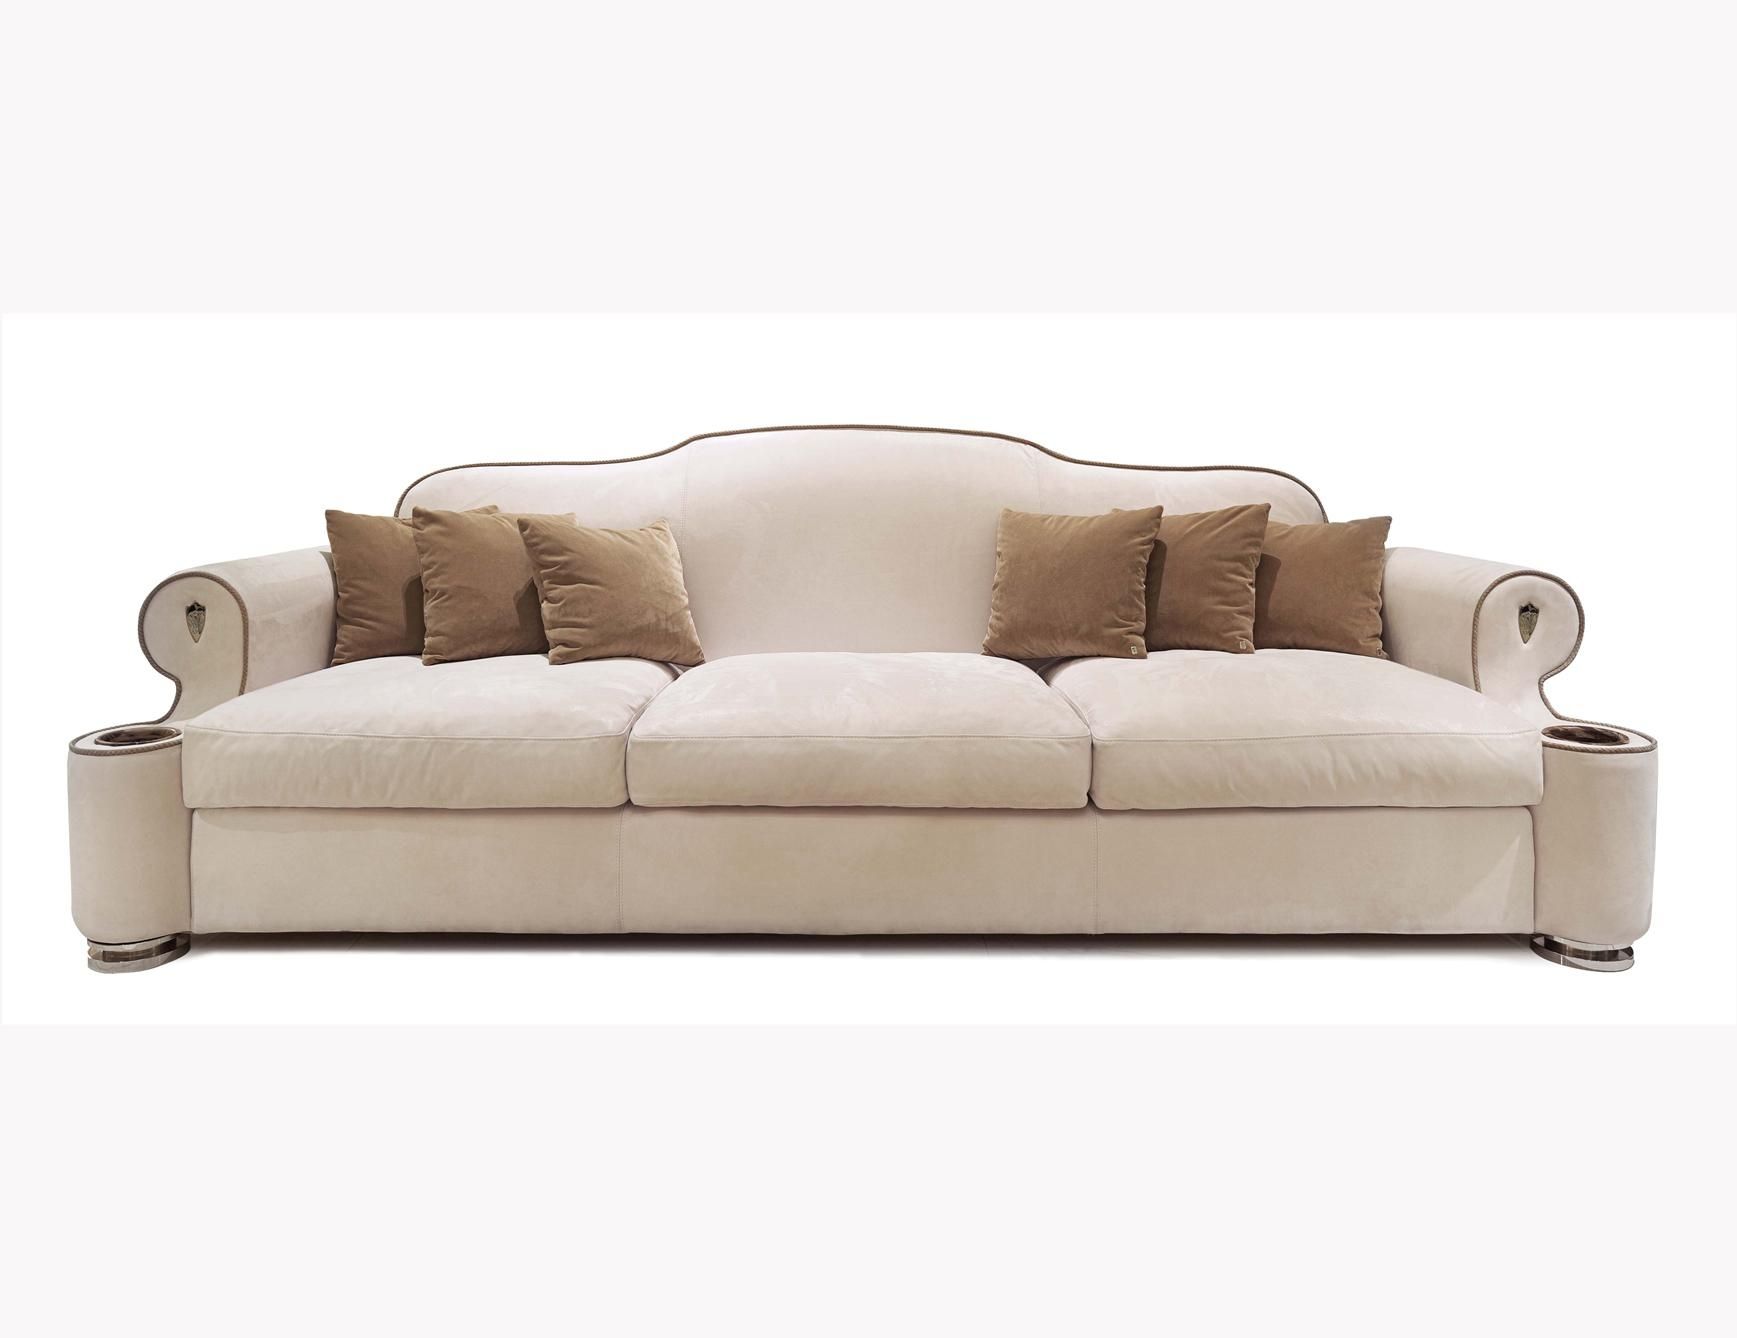 Visionnaire Ipe Cavalli Luxury Designer Furniture: Nella Vetrina Within Sofas And Chairs (View 17 of 20)